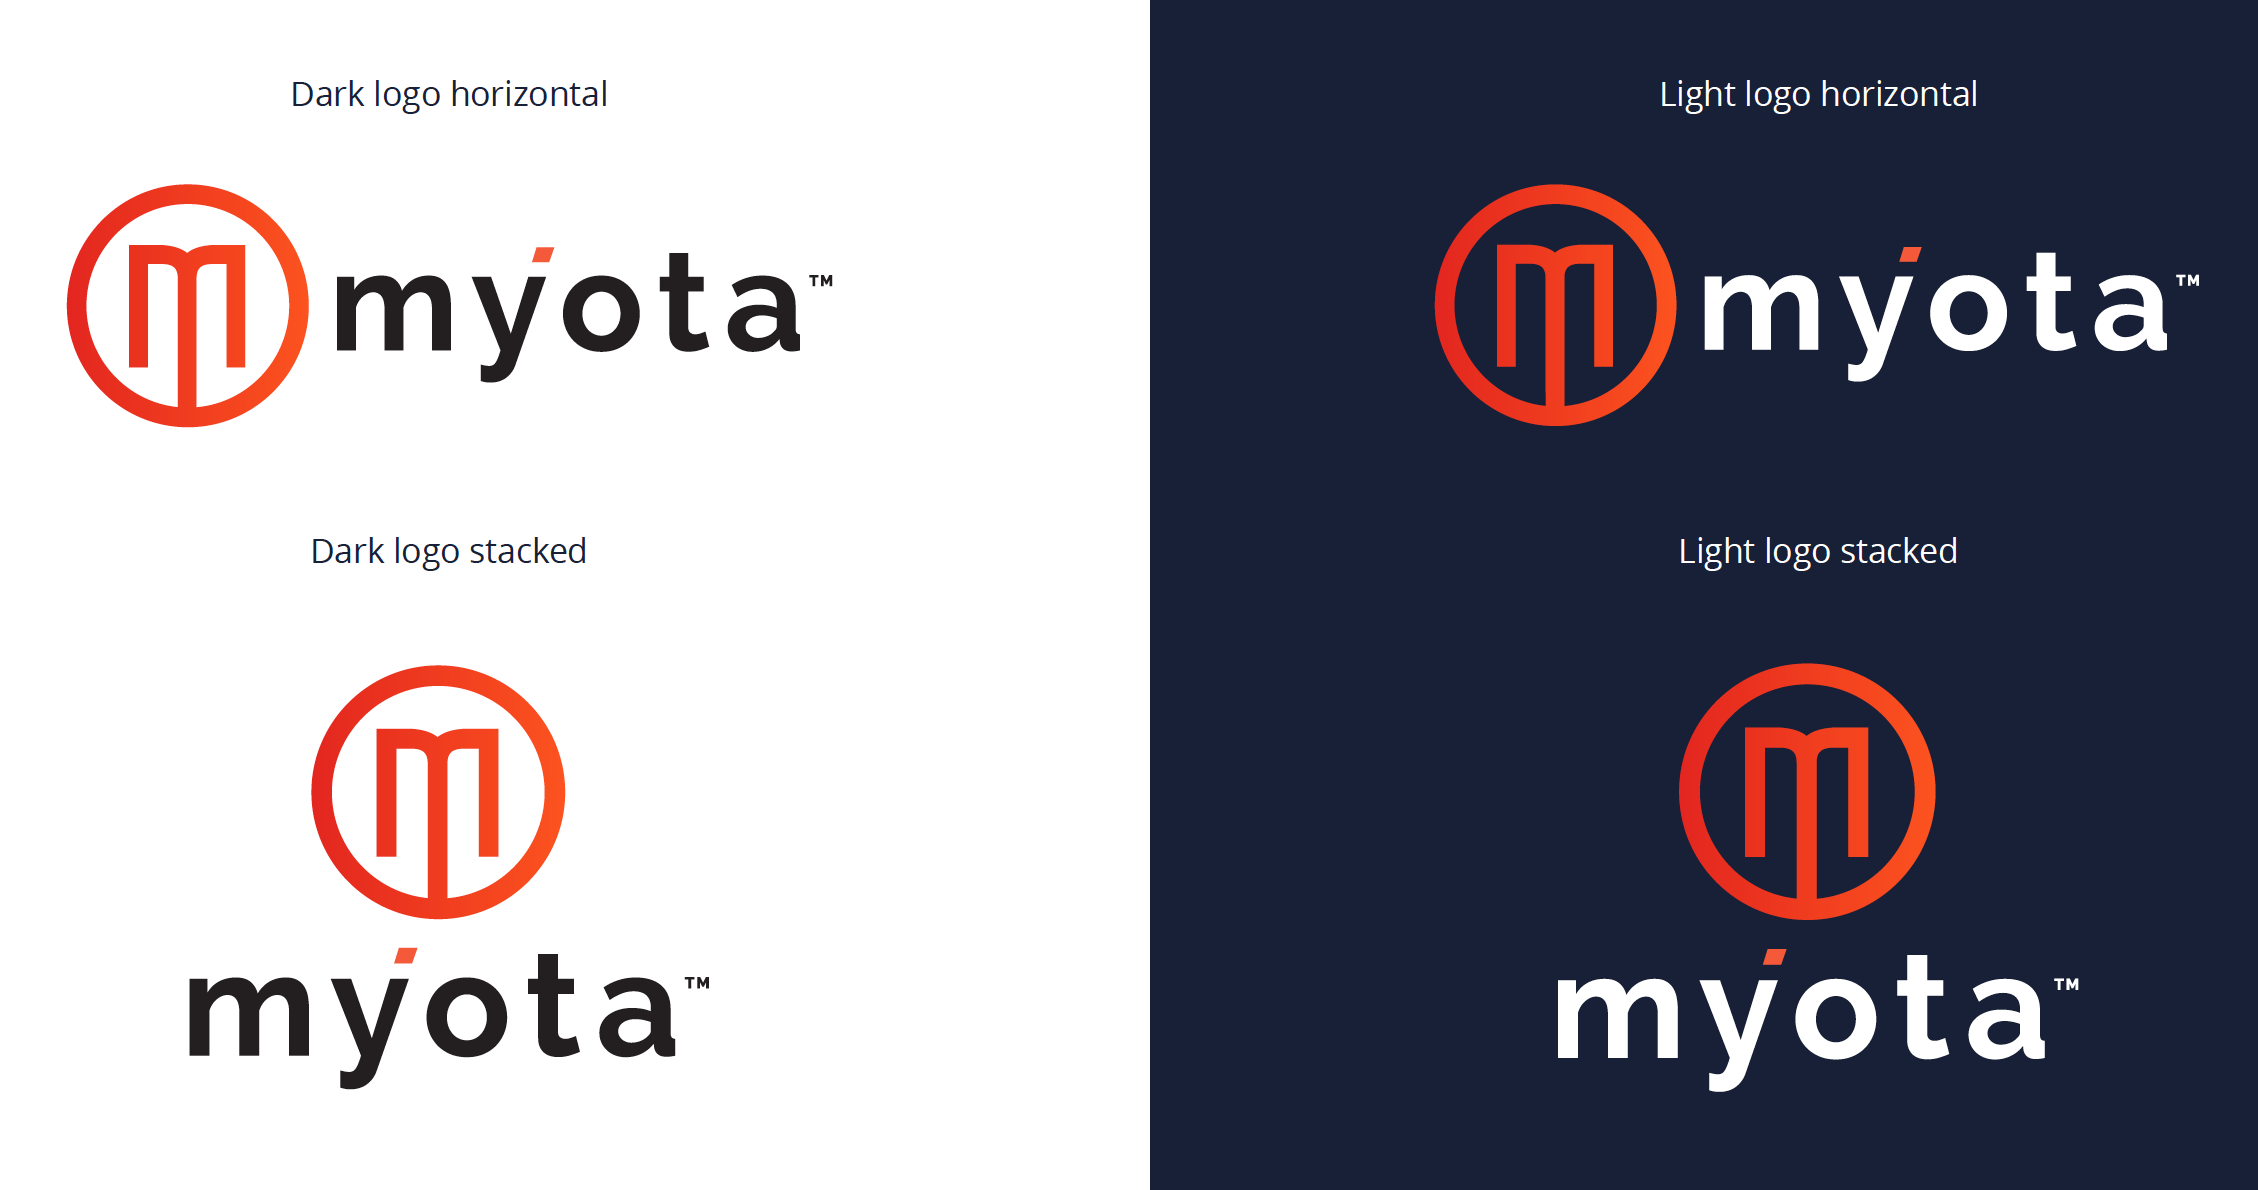 Myota logo use